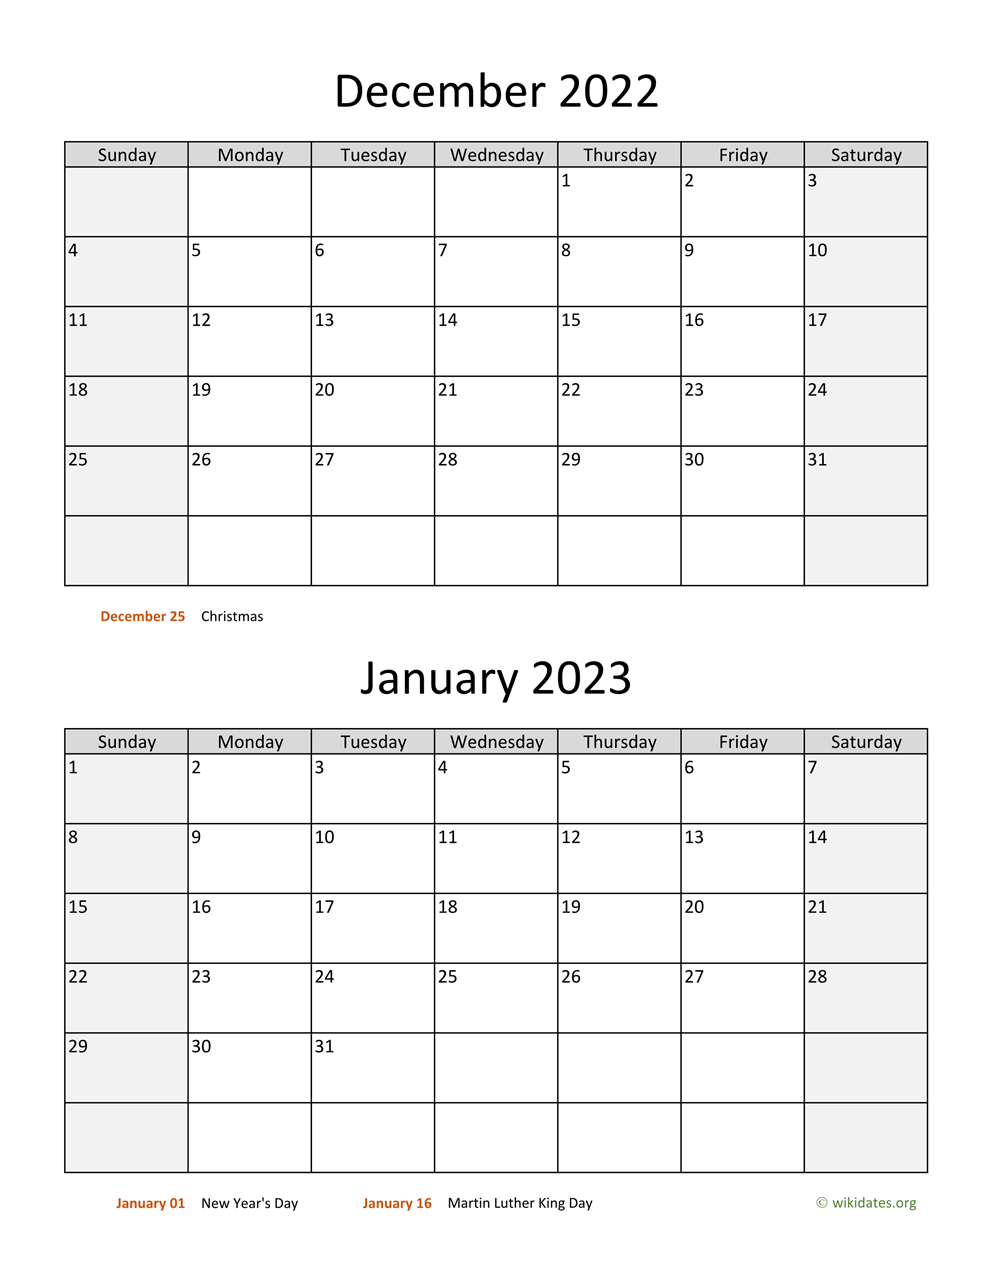 December 2022 January 2023 Calendar December 2022 And January 2023 Calendar | Wikidates.org